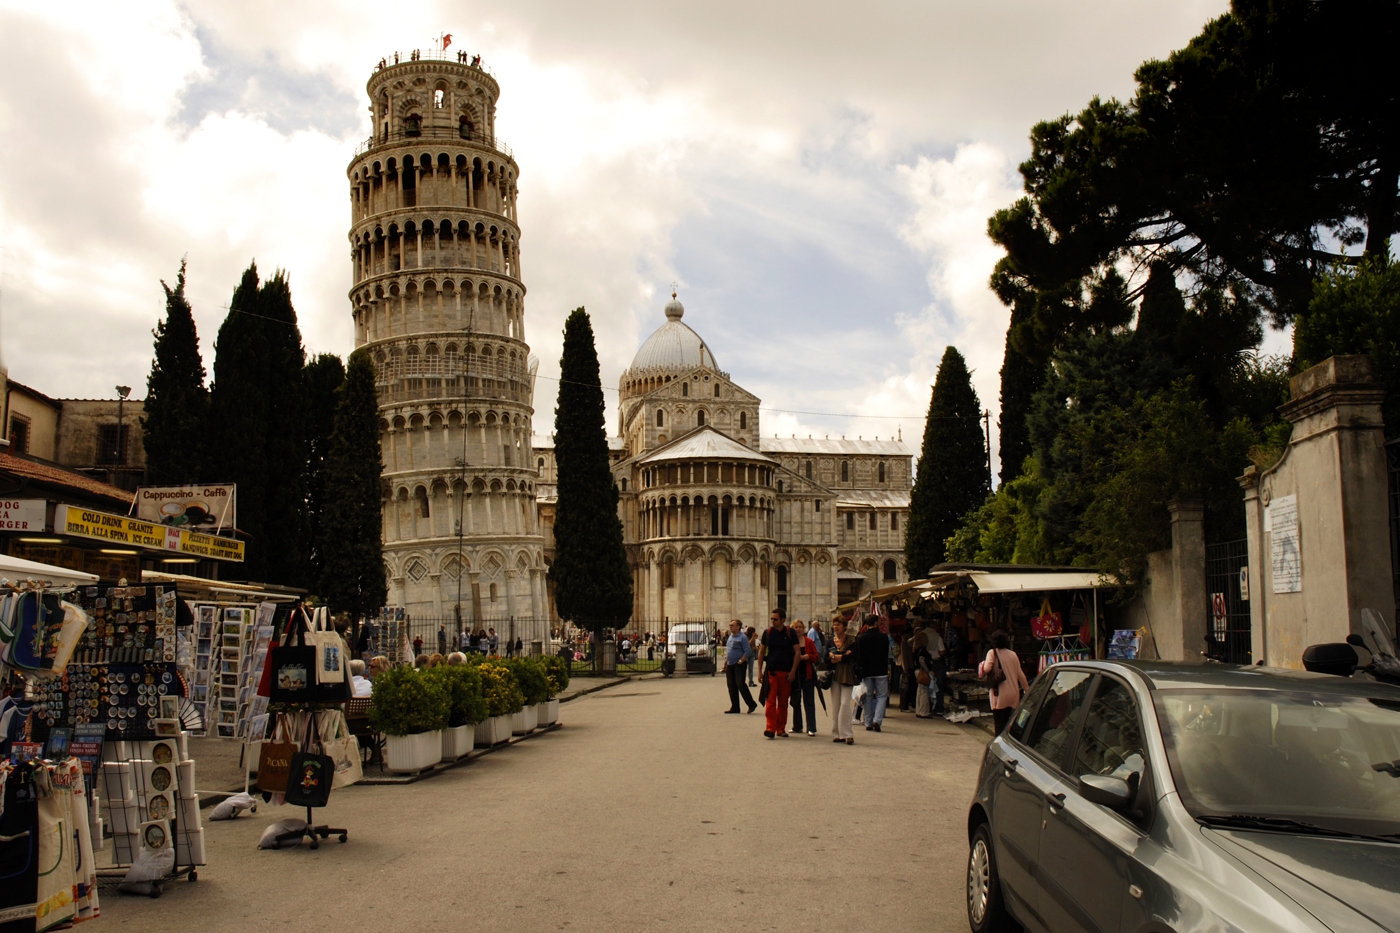 City of Pisa